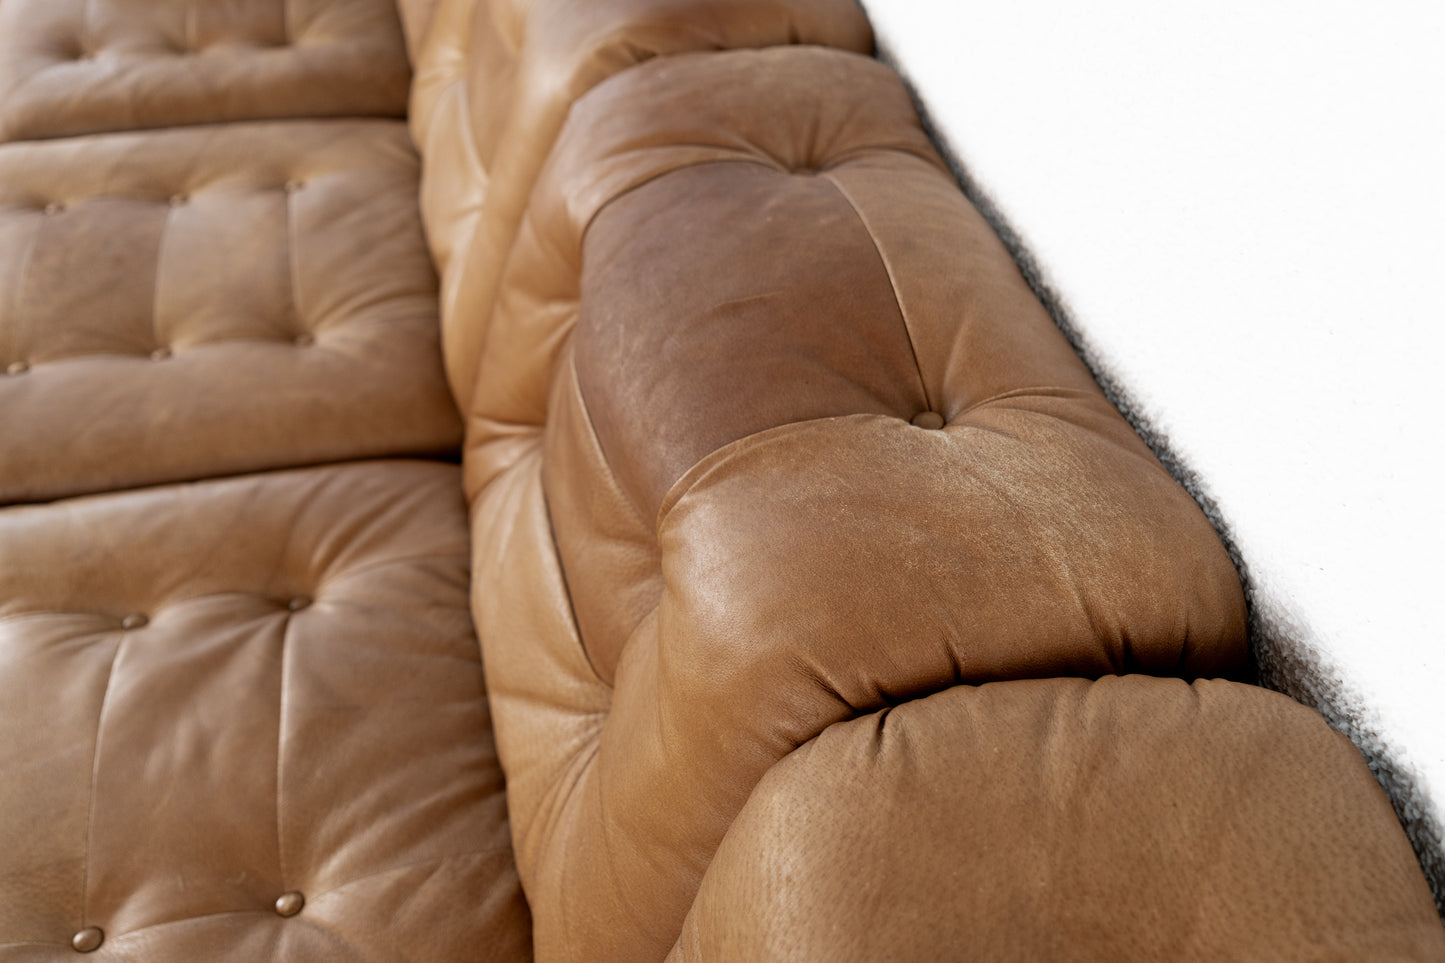 Modulares Vintage Sofa 6 Elemente Kunstleder Braun Mid Century Sessel Couch 1960er